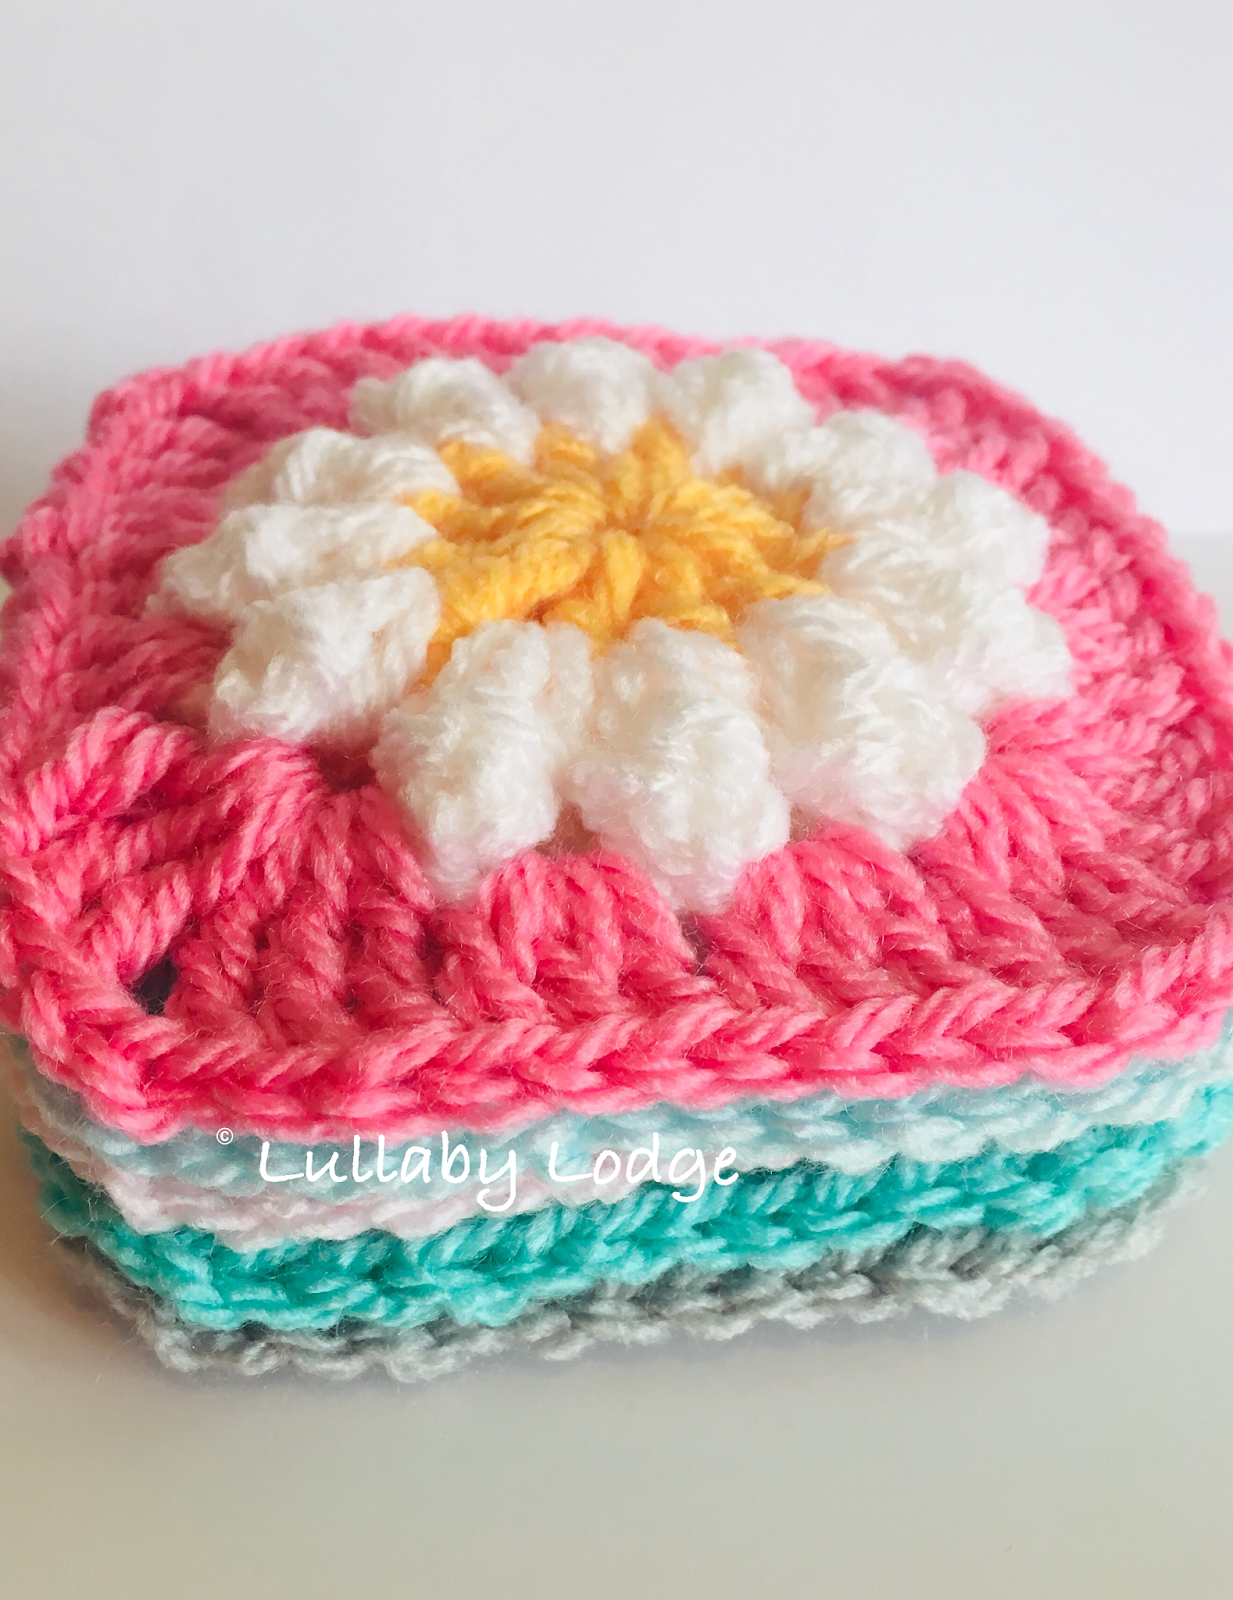 Daisy Granny Square Crochet Tutorial 